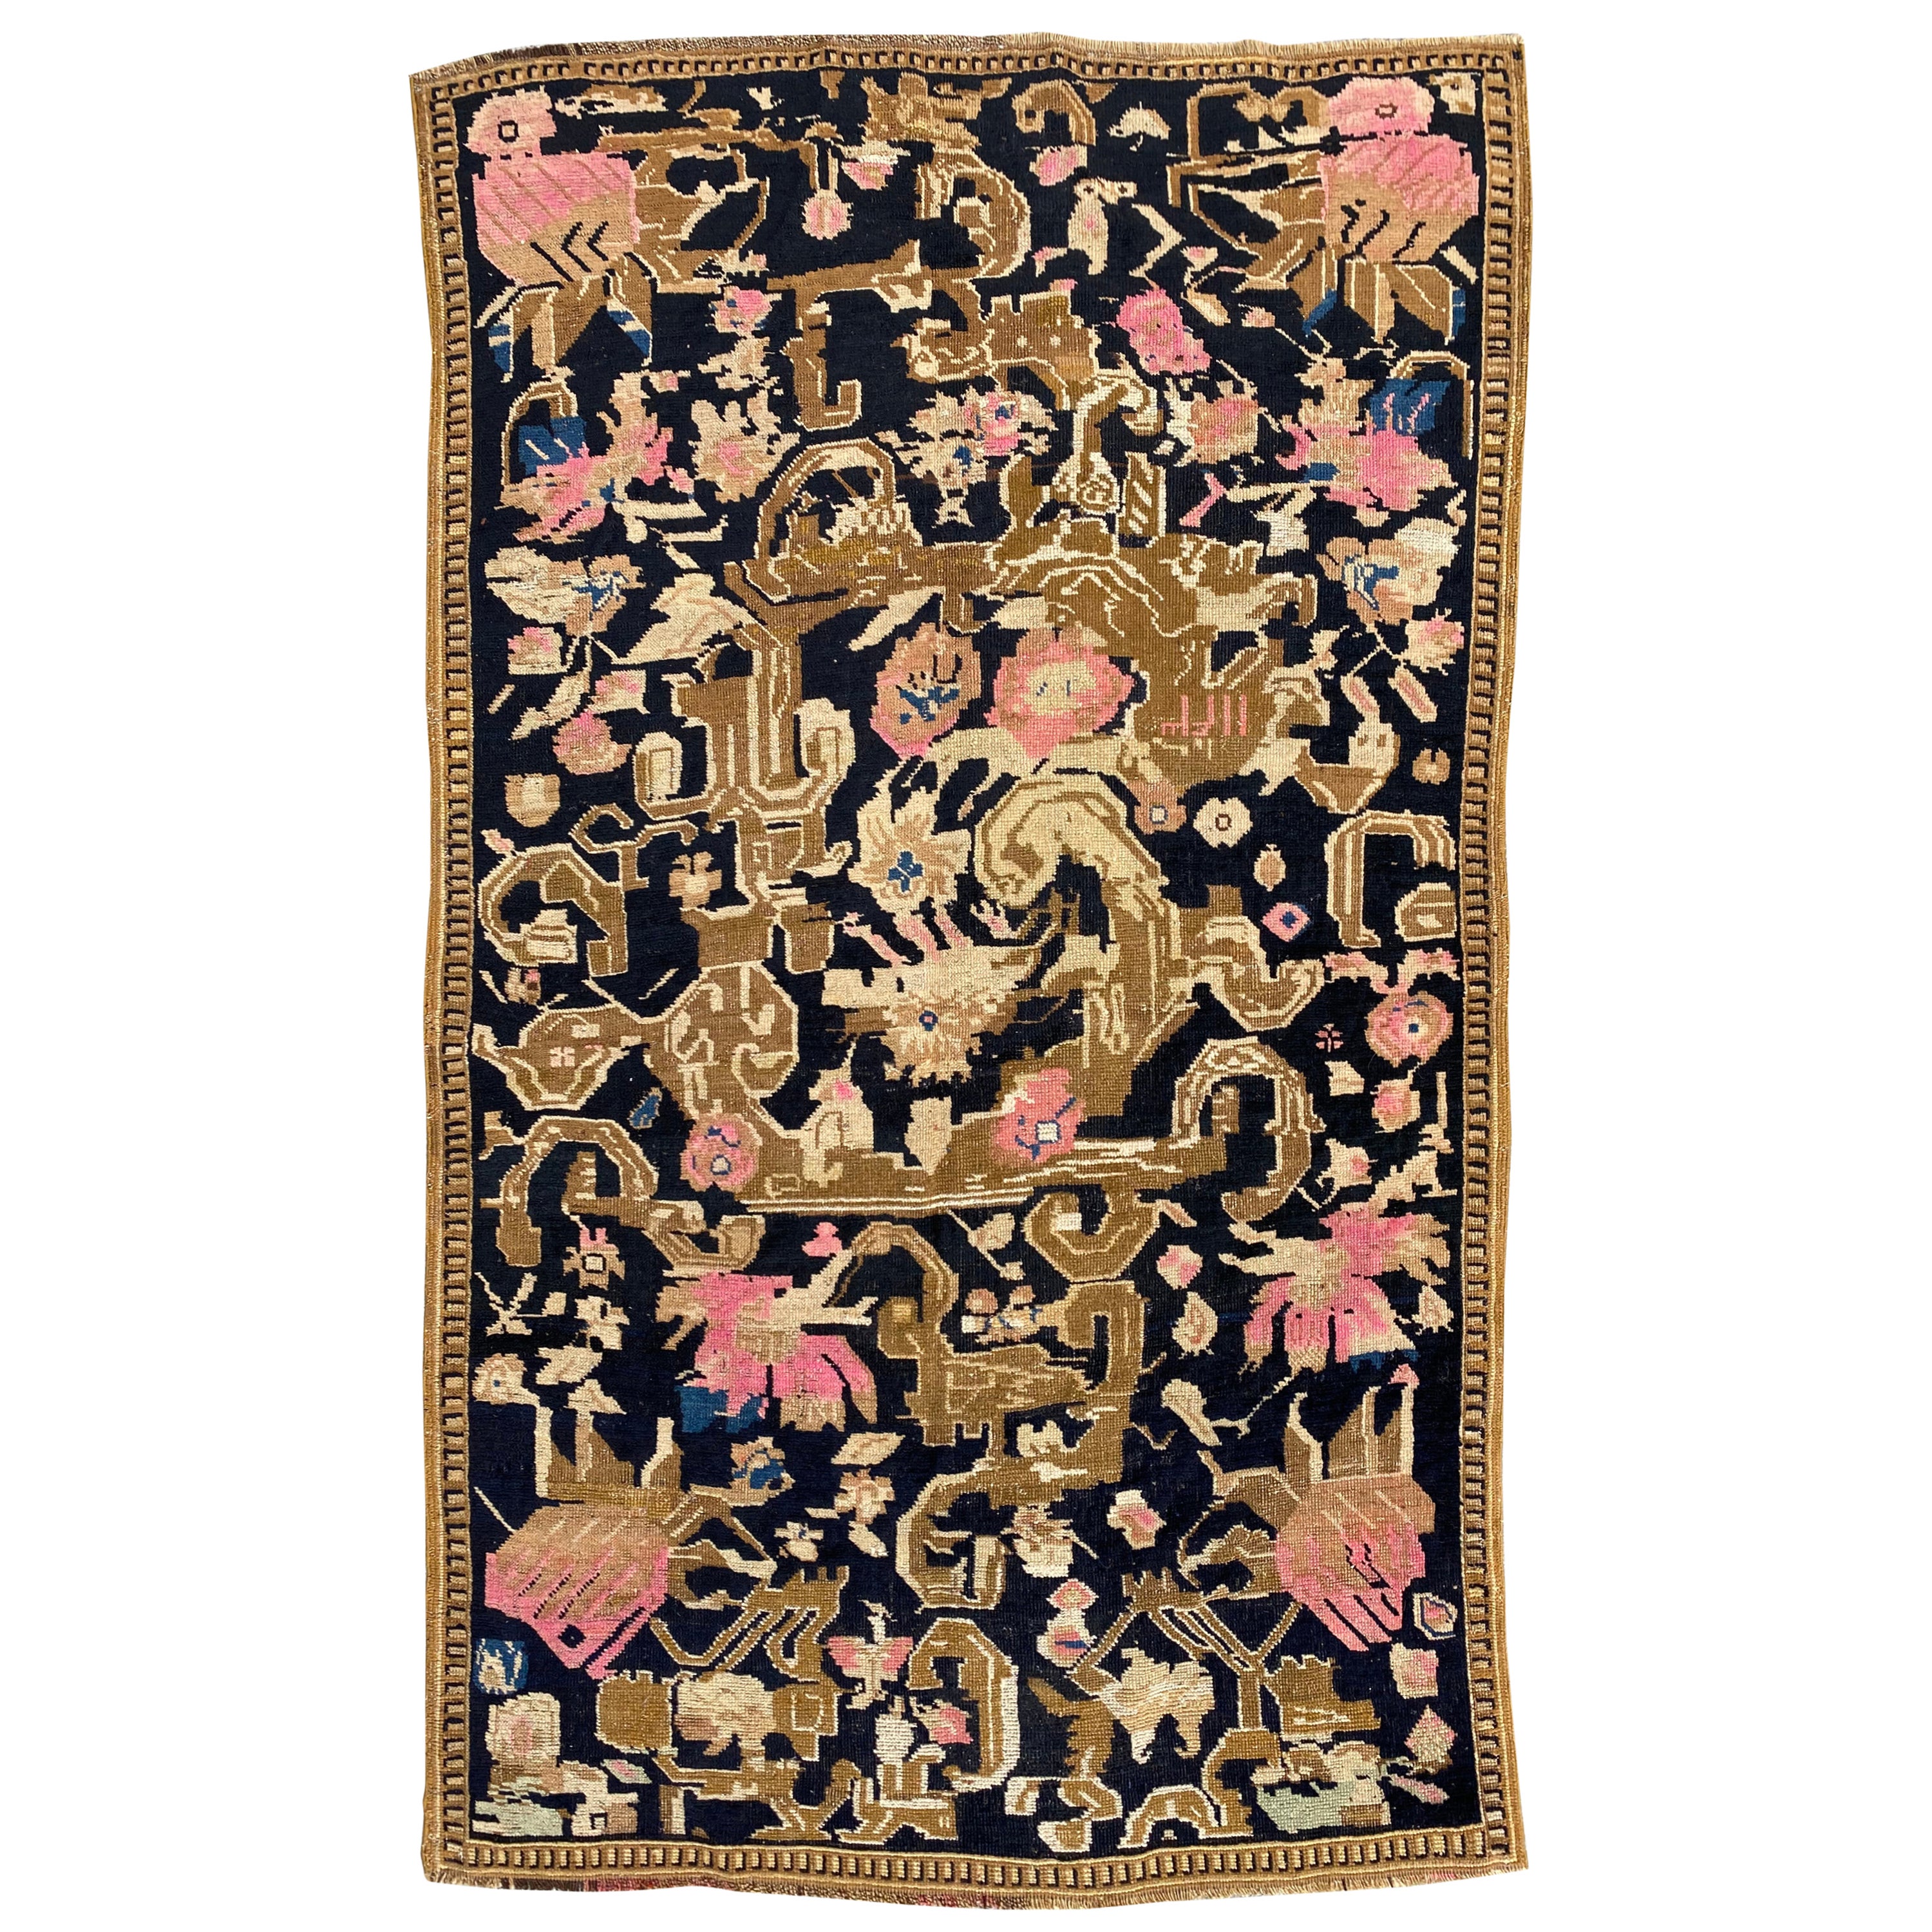 Le joli petit tapis ancien de Karabagh de Bobyrug